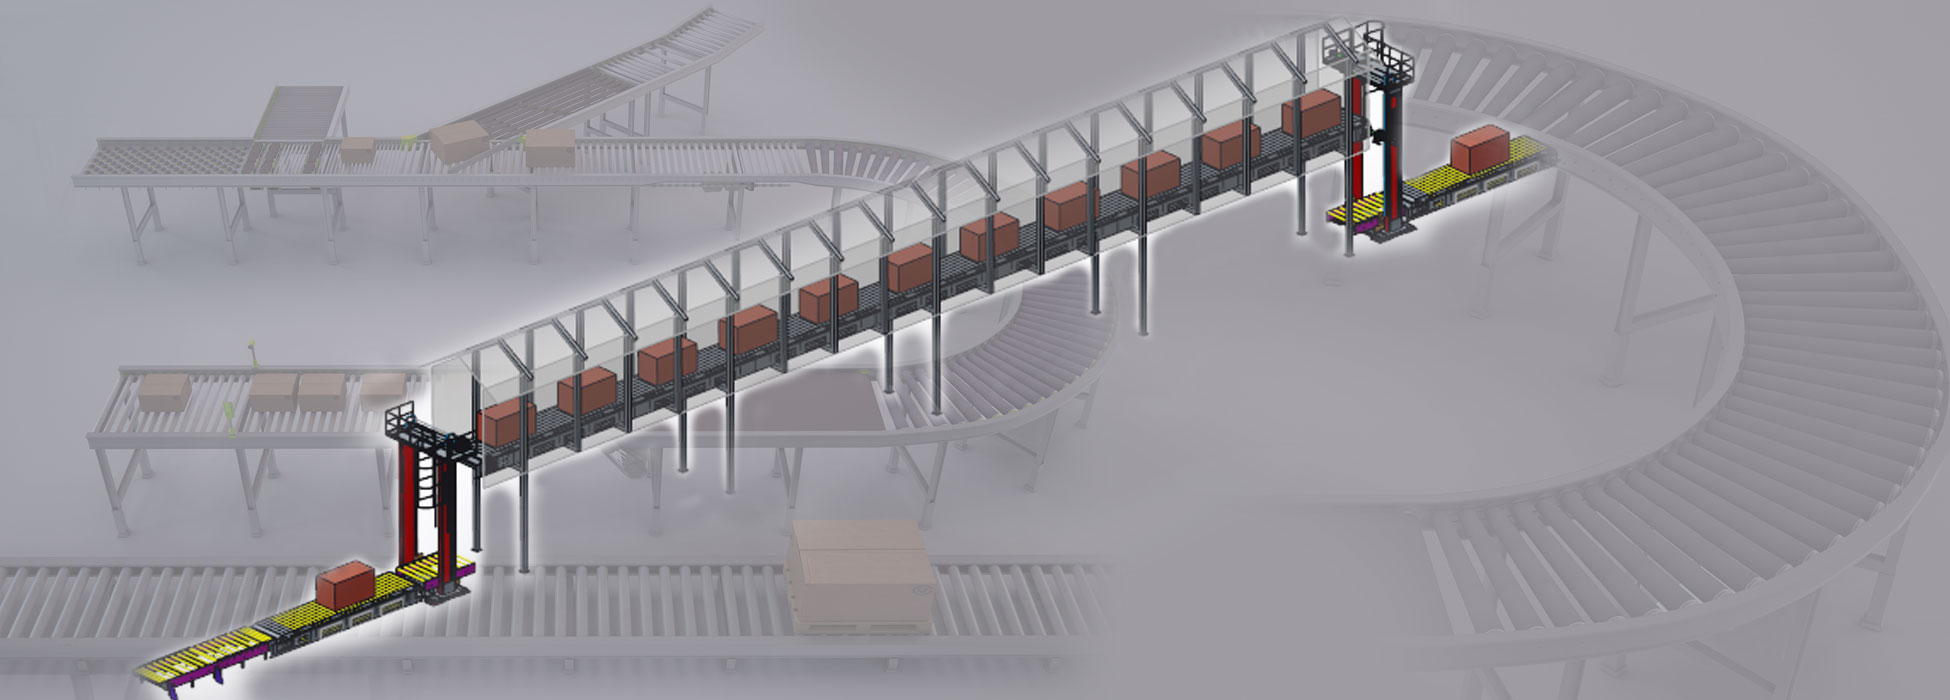 Warehouse Transfer System